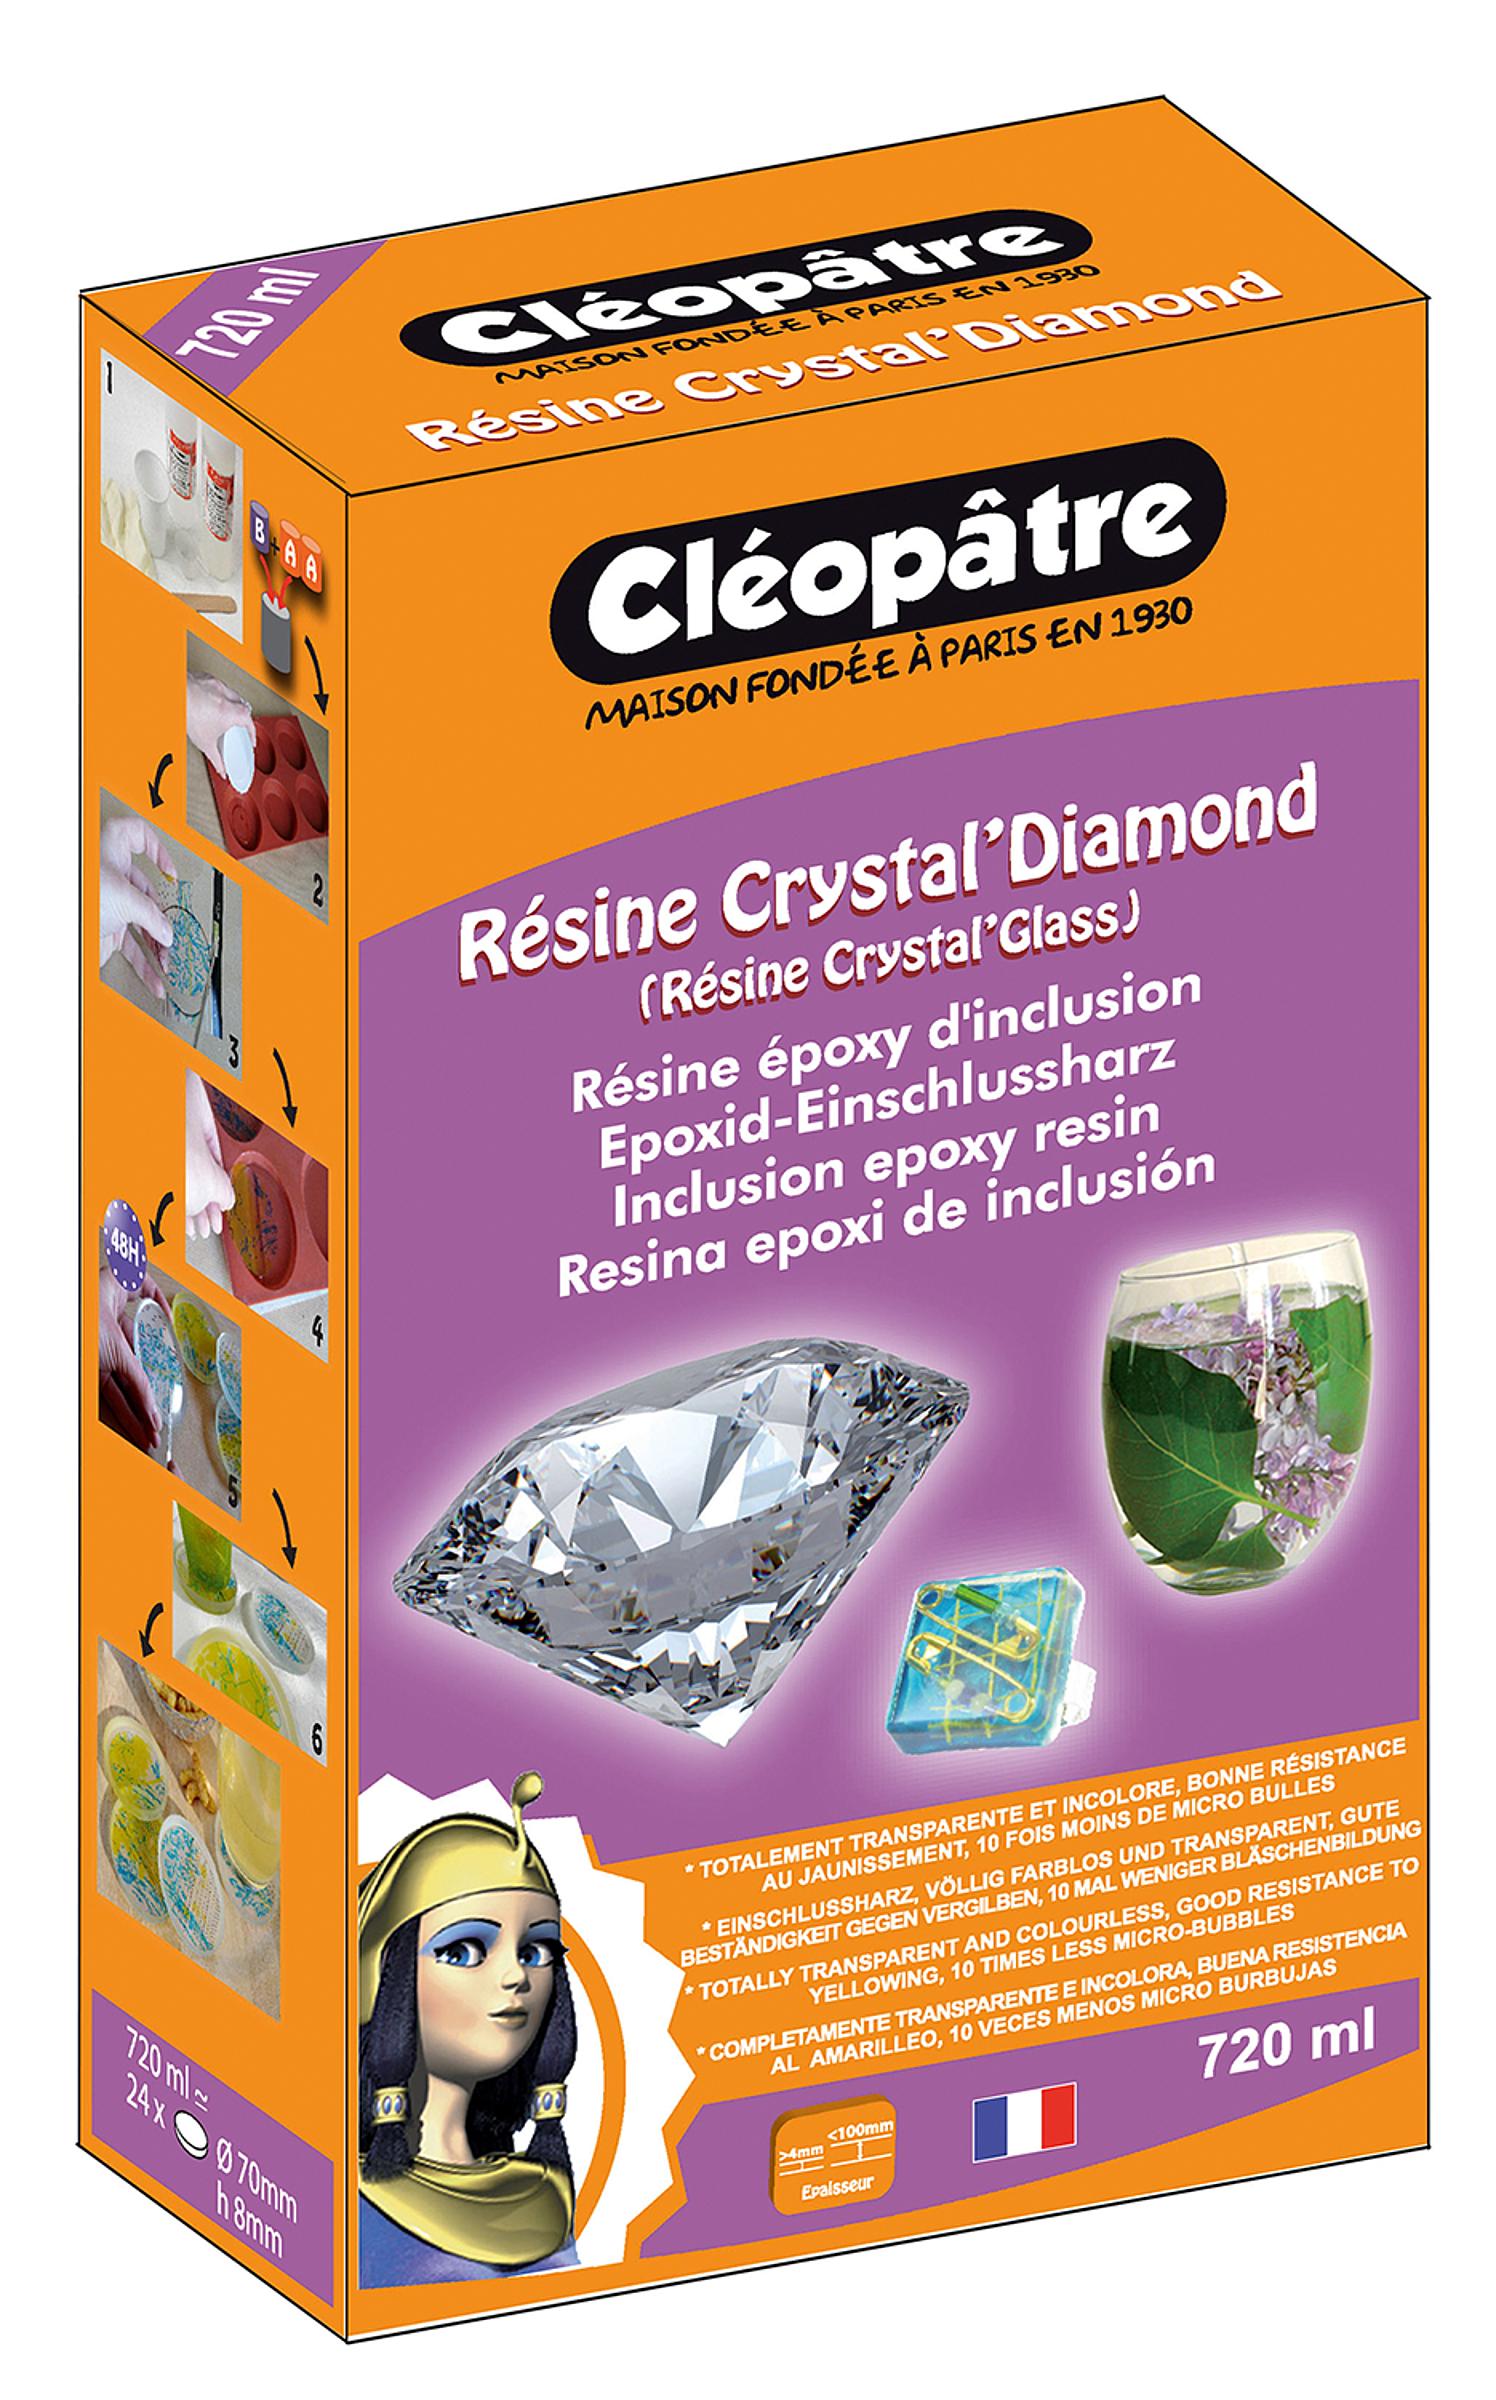 Cléopâtre Résine Crystal' Diamond, boesner Suisse